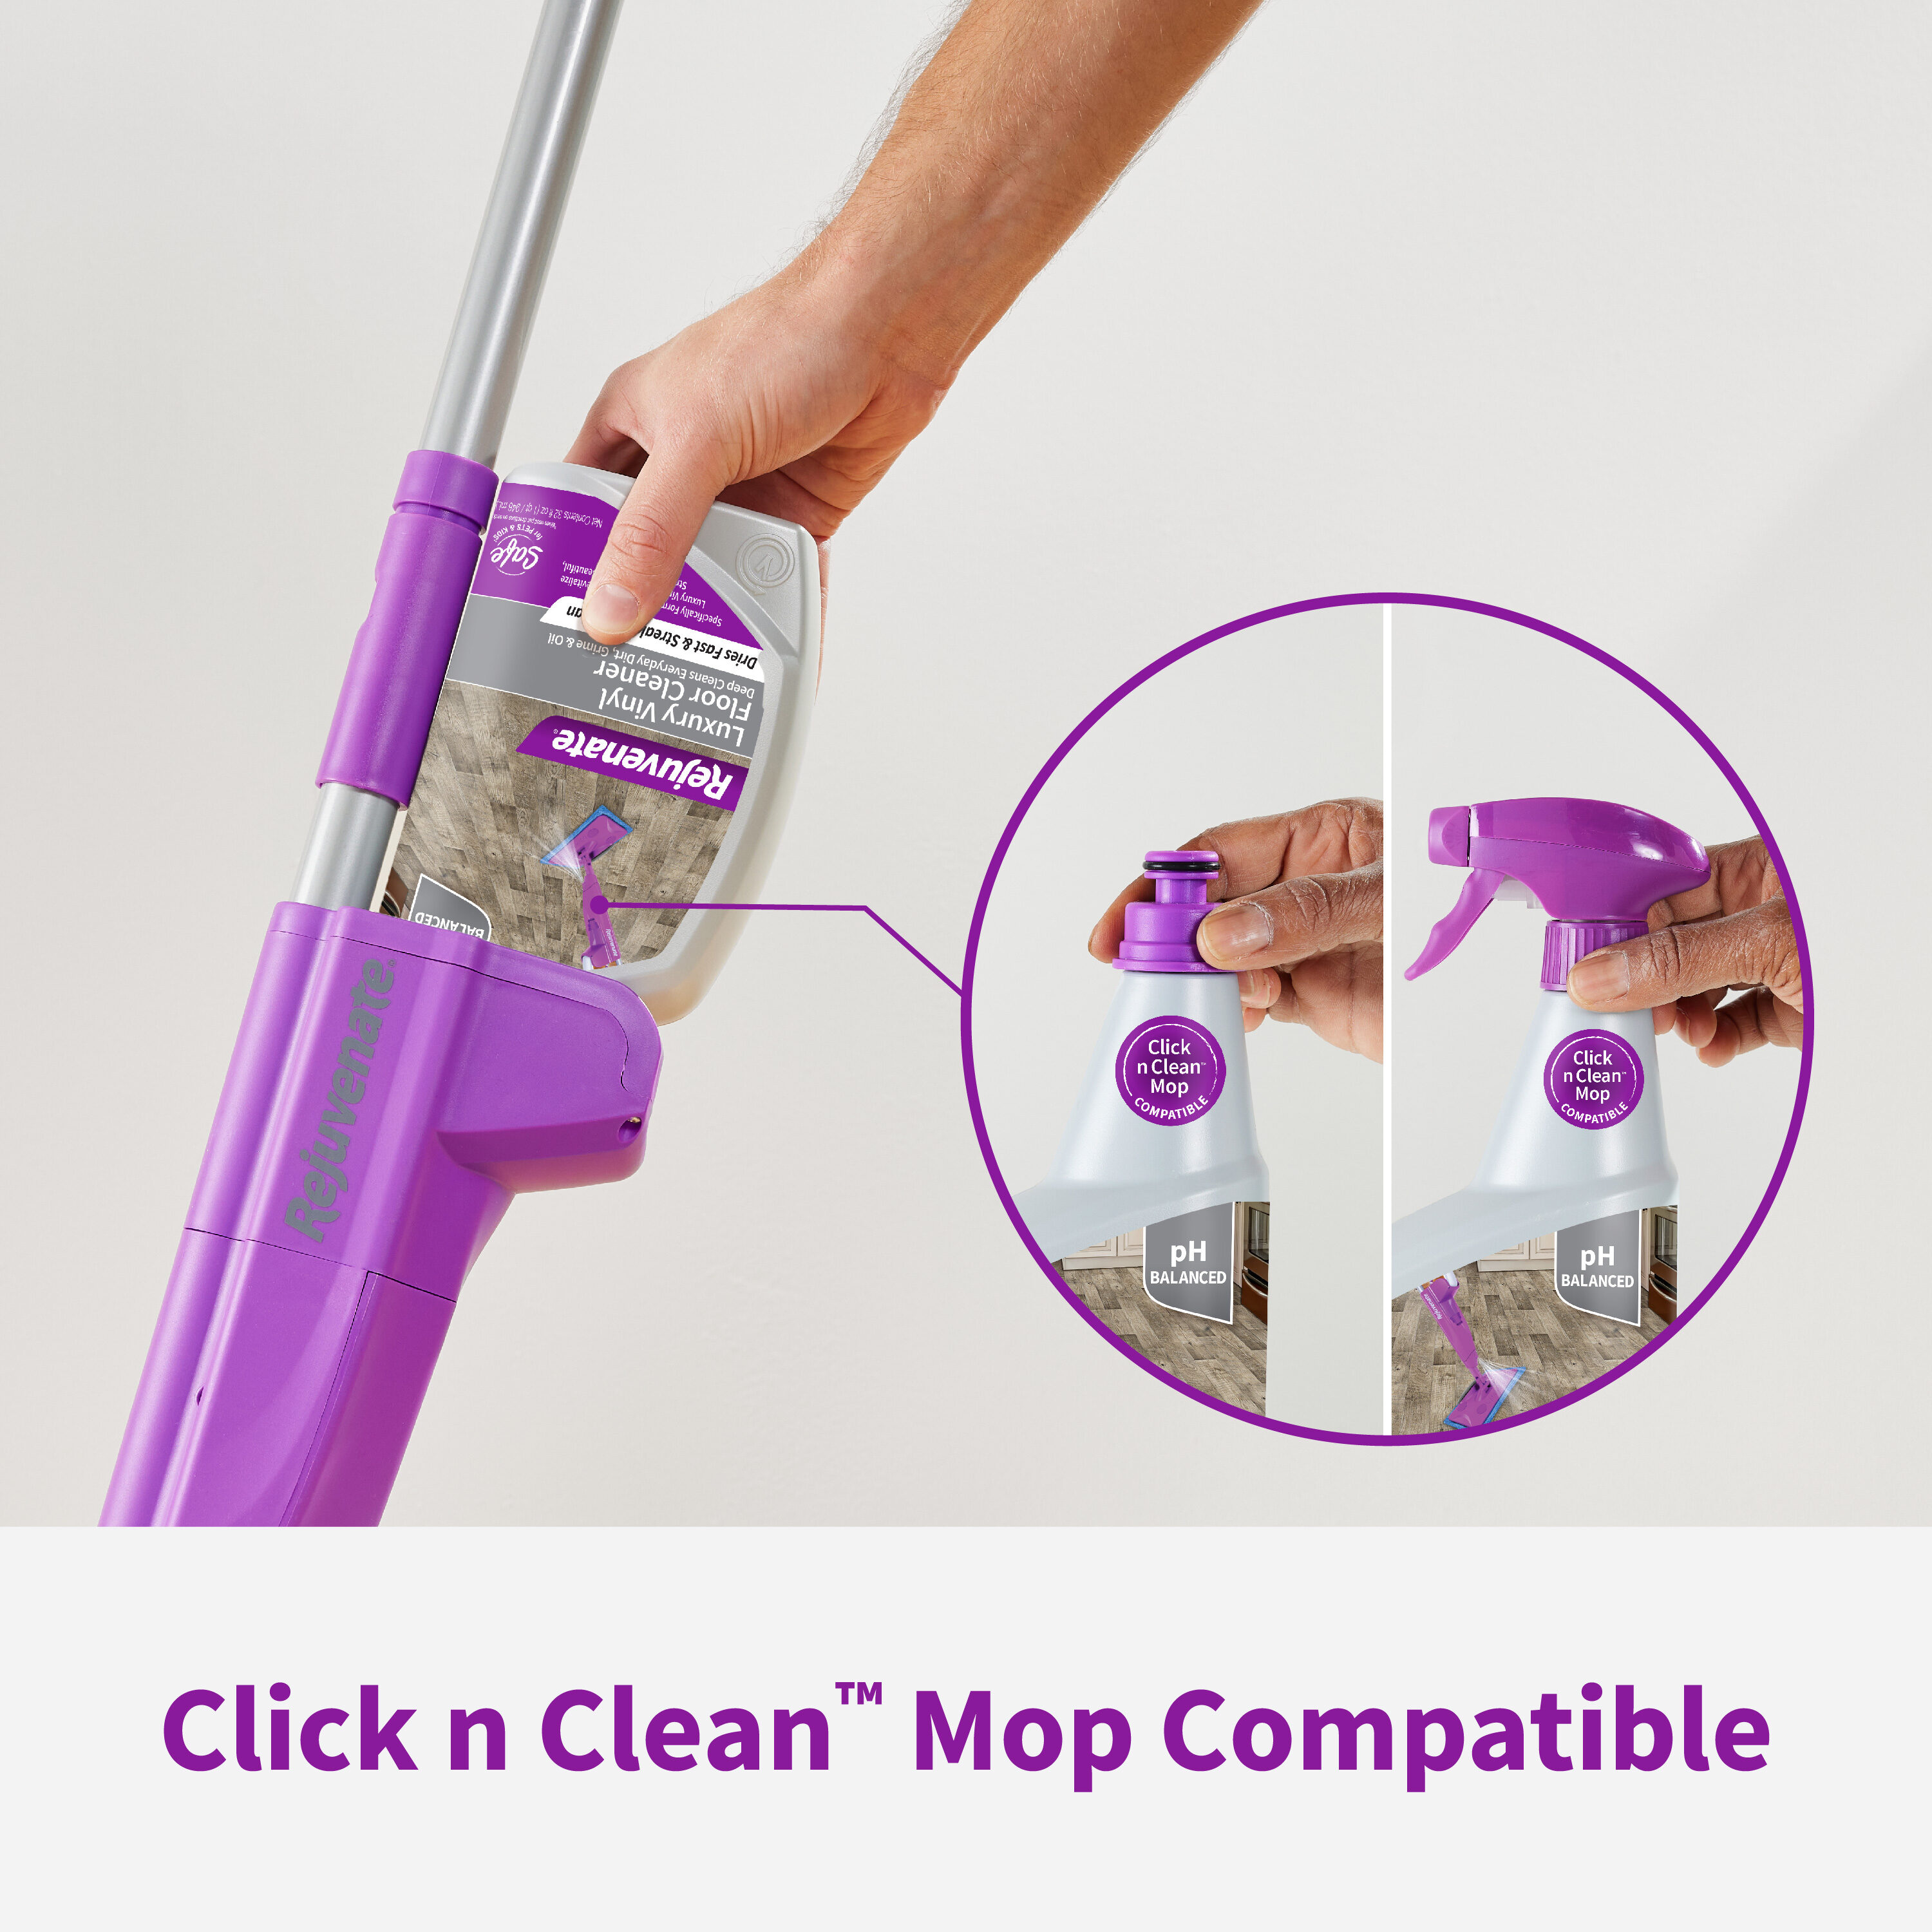 Rejuvenate Click N Clean Luxury Vinyl Spray Mop System 